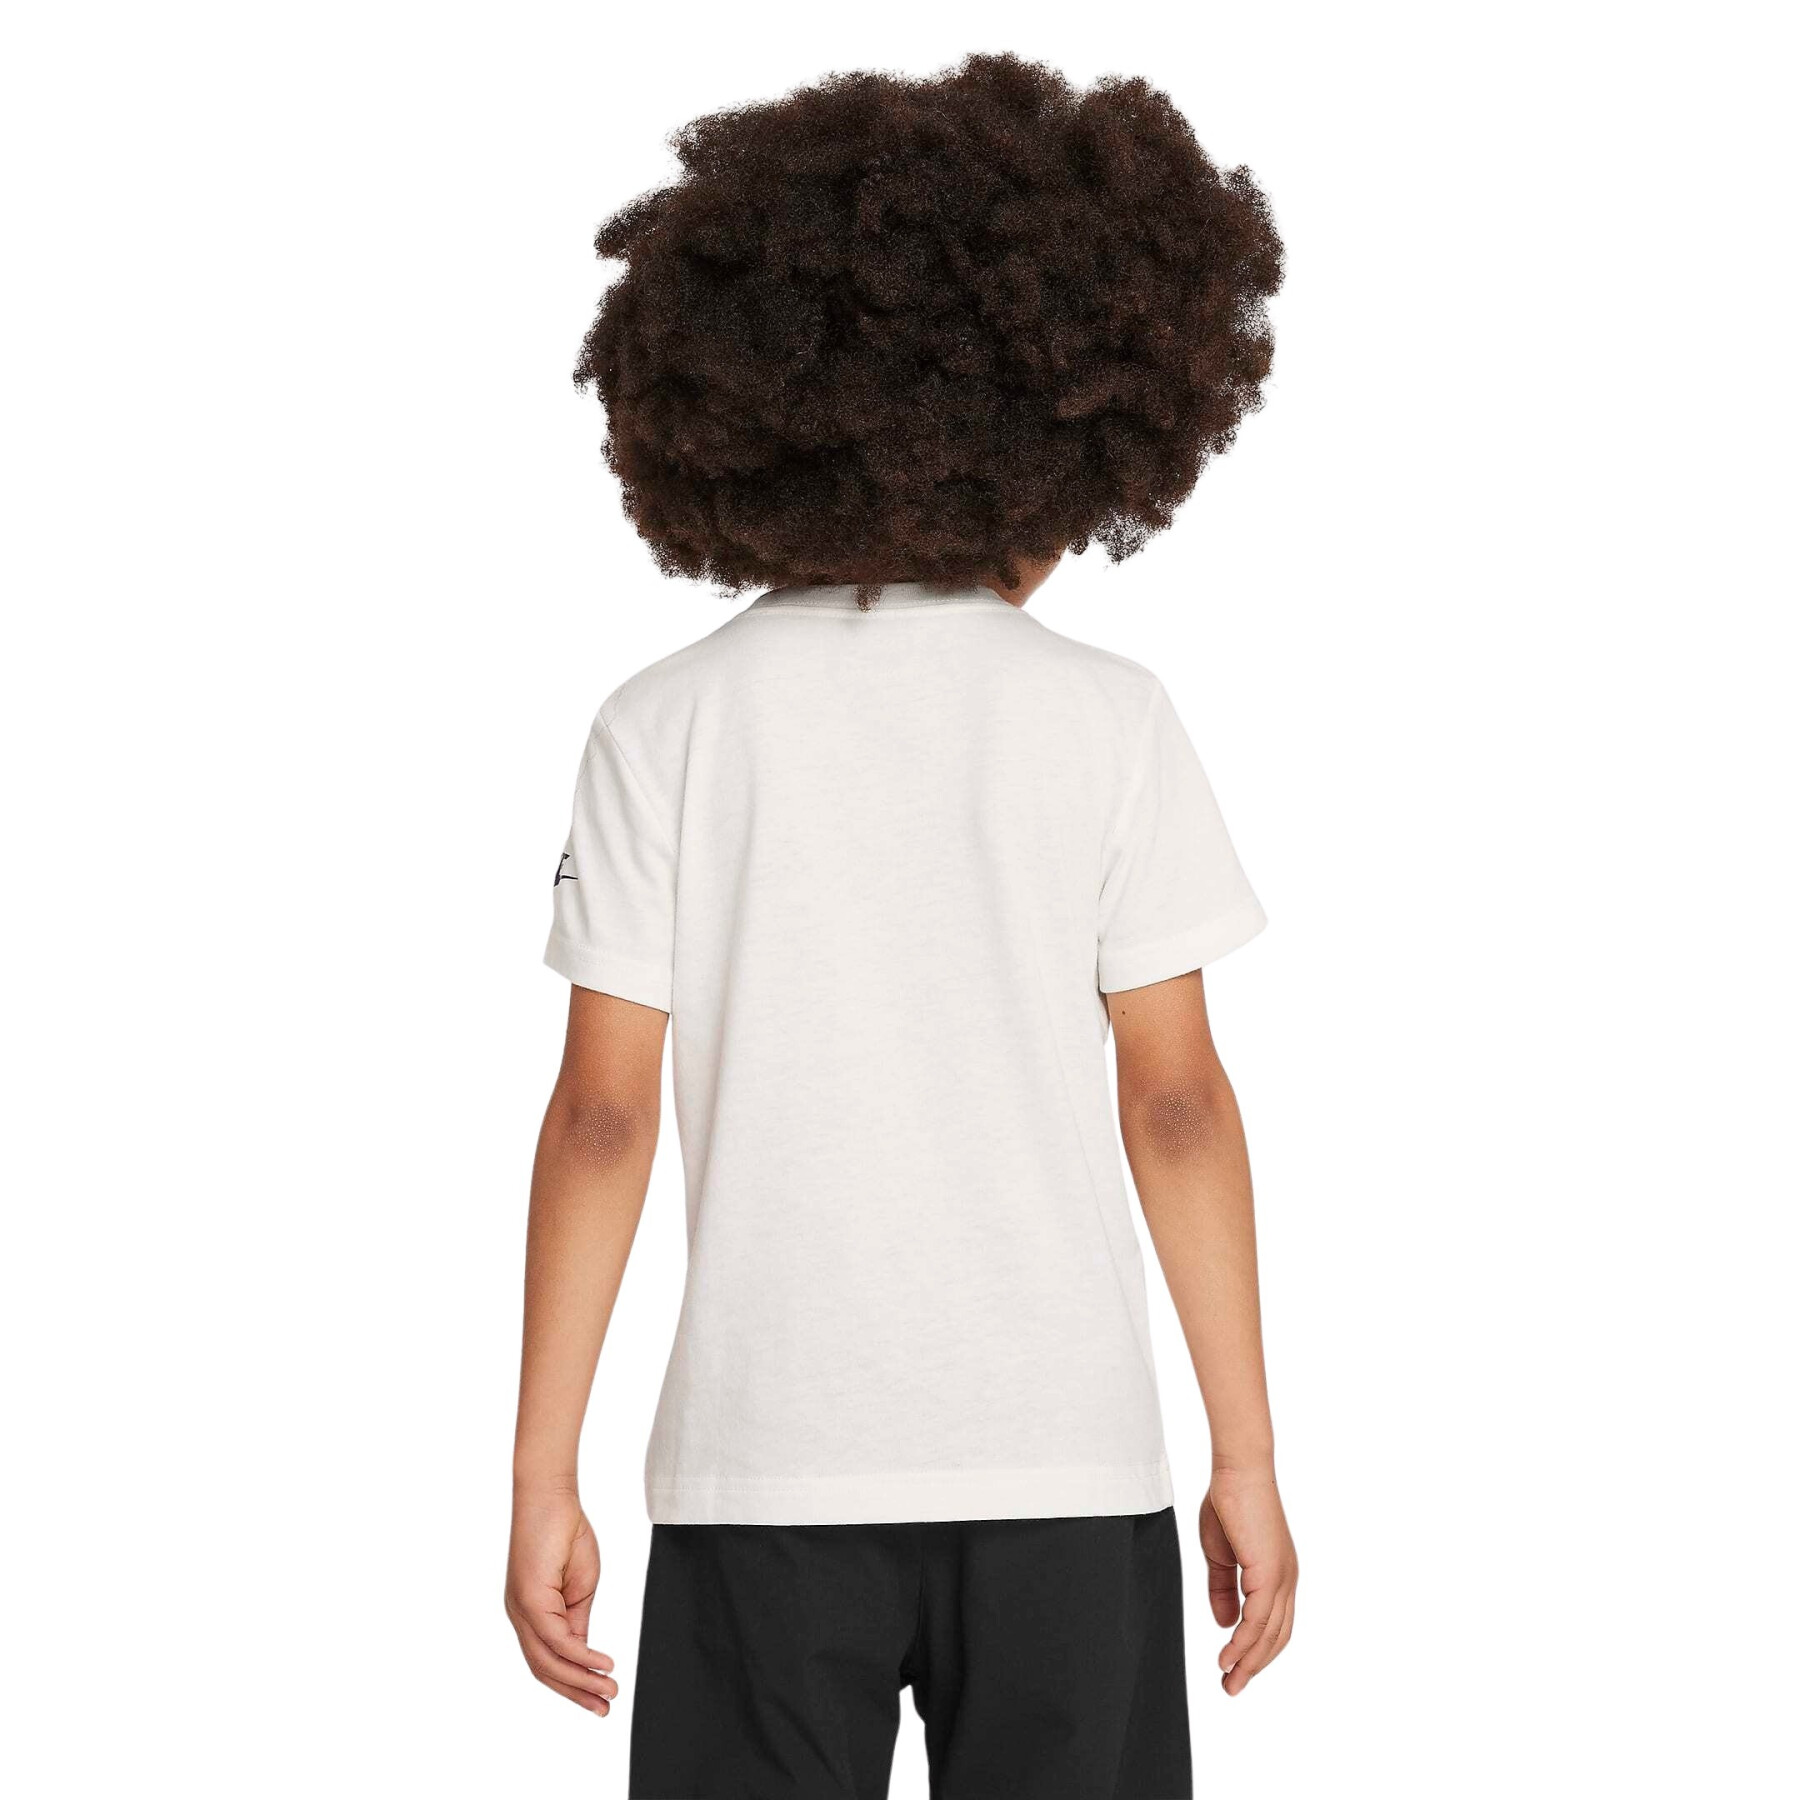 Child's T-shirt Nike Smiley JDI